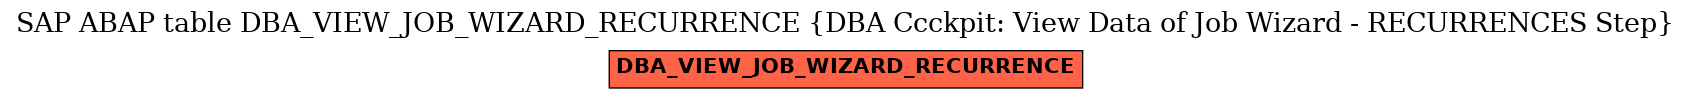 E-R Diagram for table DBA_VIEW_JOB_WIZARD_RECURRENCE (DBA Ccckpit: View Data of Job Wizard - RECURRENCES Step)